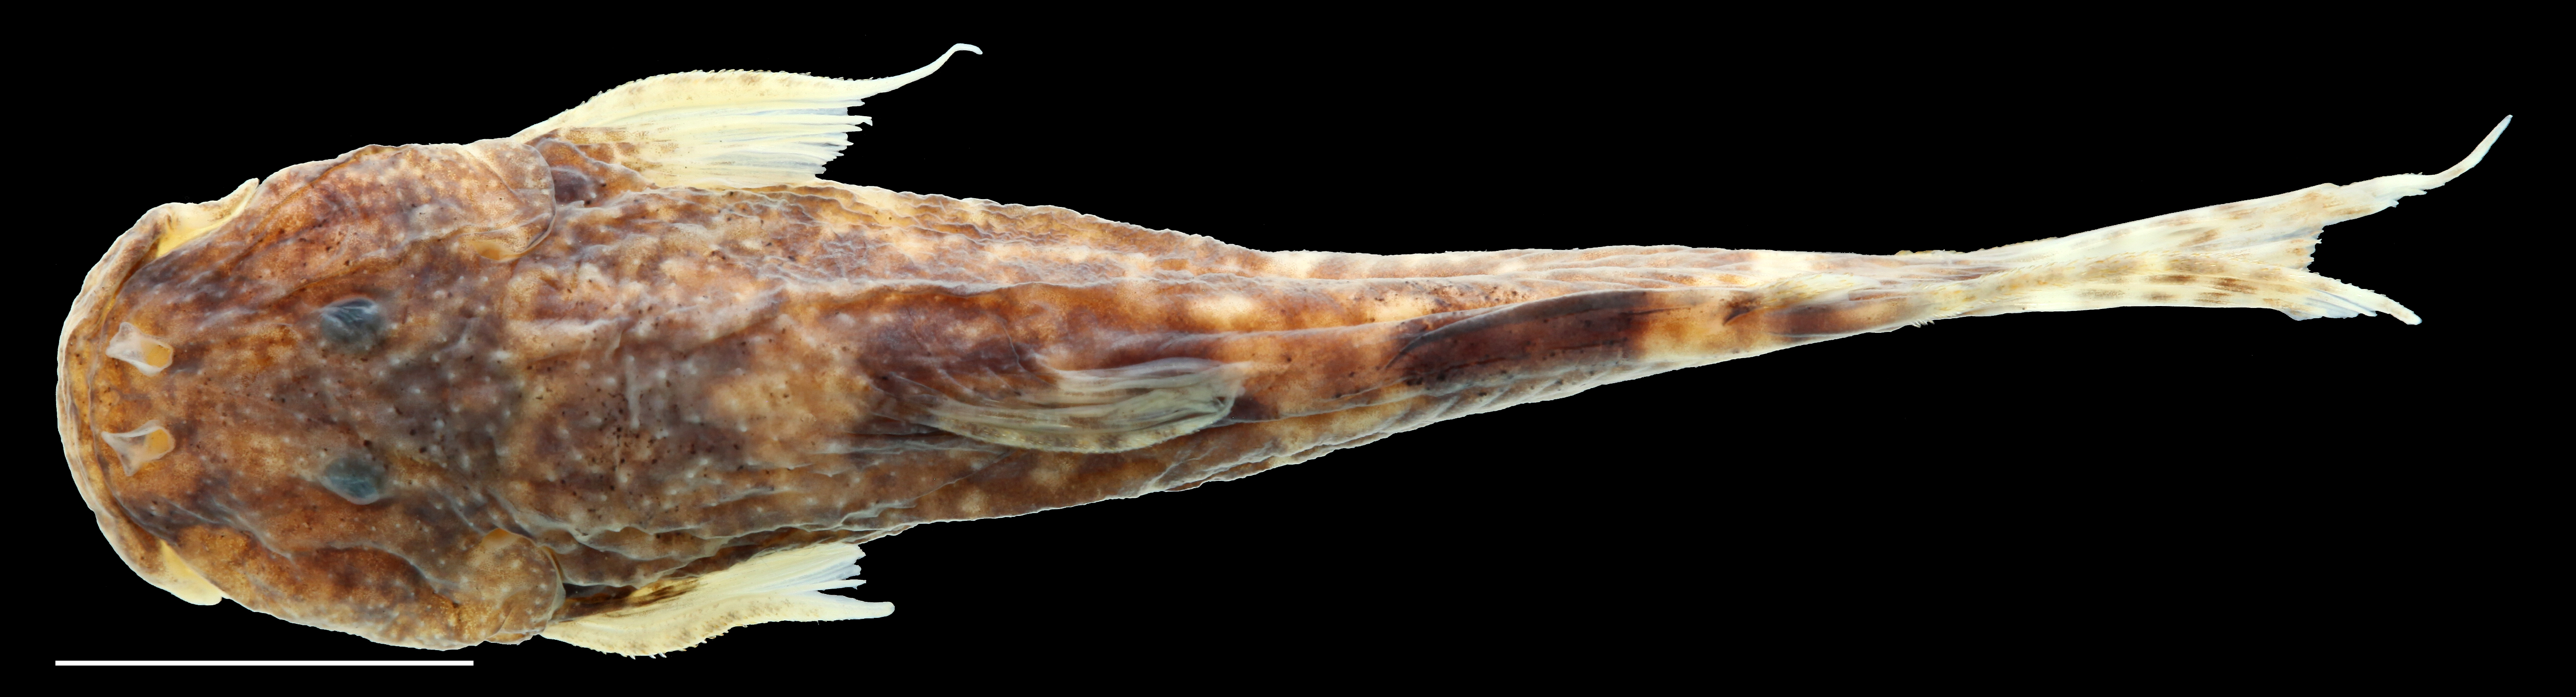 Paratype of <em>Astroblepus putumayoensis</em>, IAvH-P-12708_Dorsal, 43.6 mm SL (scale bar = 1 cm). Photograph by C. DoNascimiento